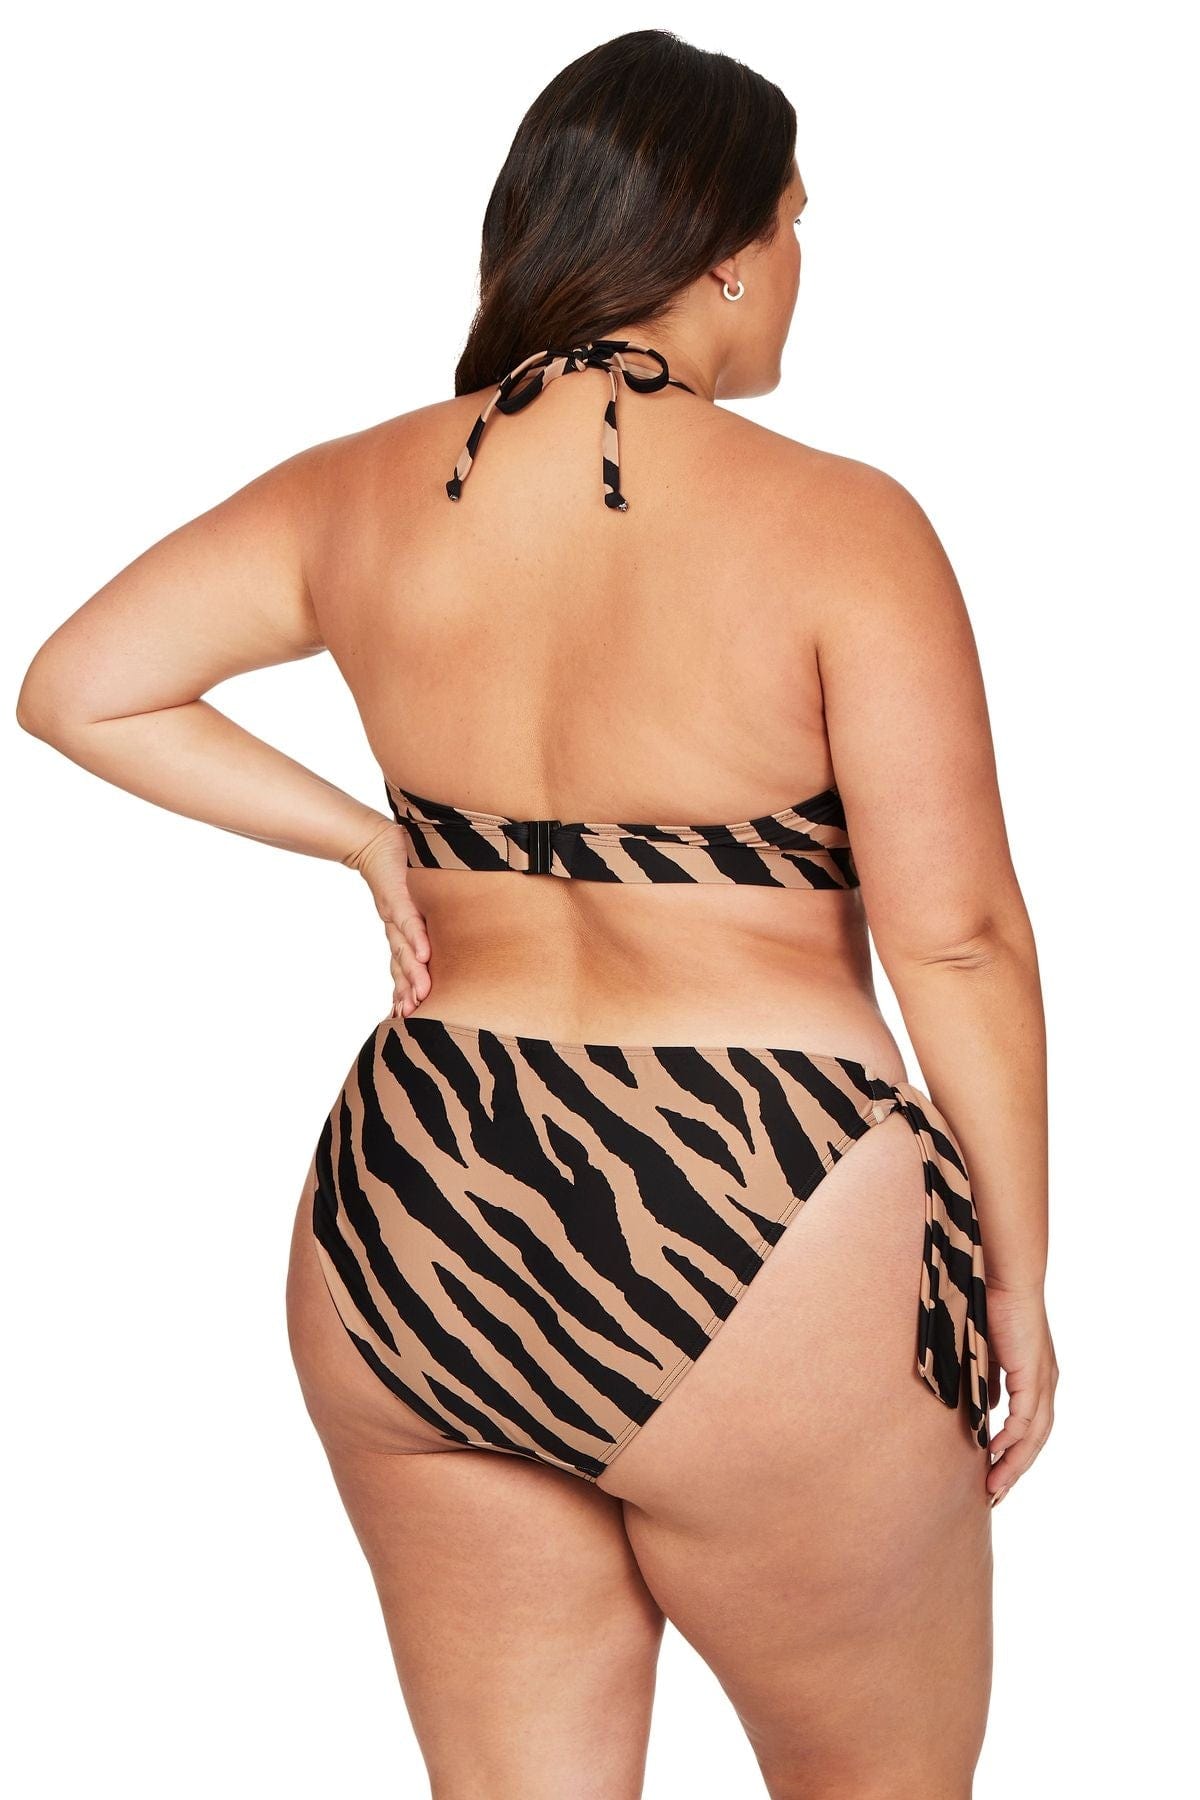 Ben'Galay Klee Triangle Bikini Top - Animal* - Artesands - Splash Swimwear  - artesands, Bikini Tops, May22, SALE, Womens, womens swim - Splash Swimwear 